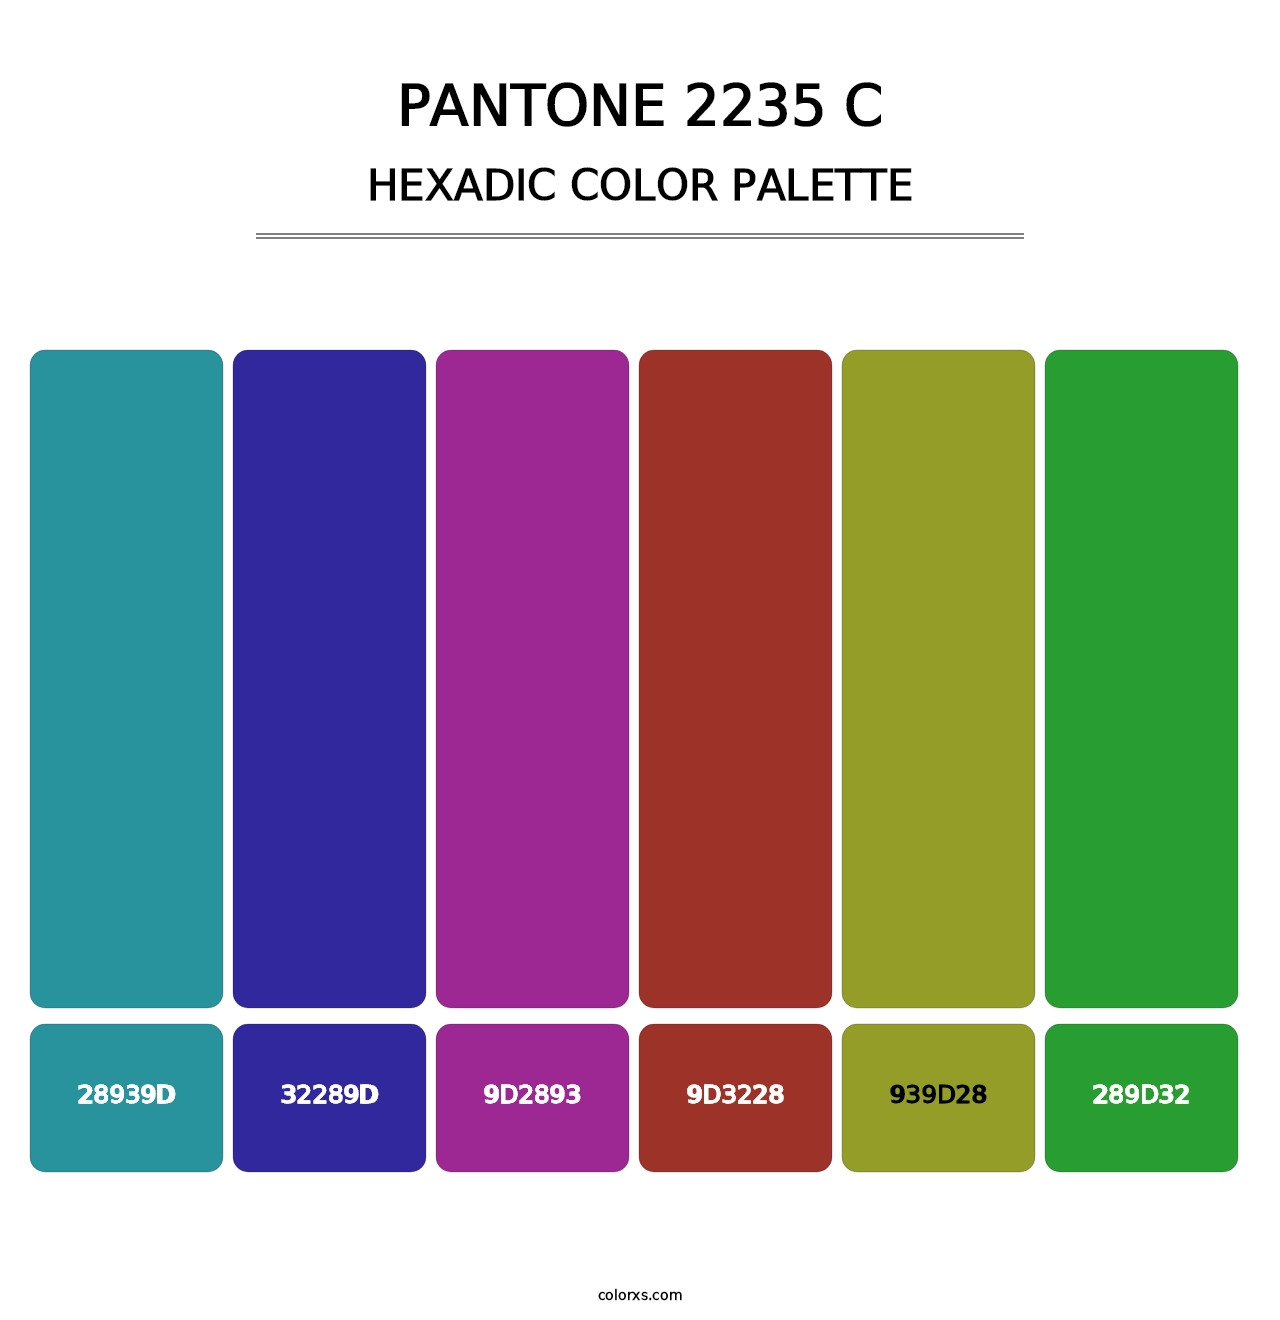 PANTONE 2235 C - Hexadic Color Palette